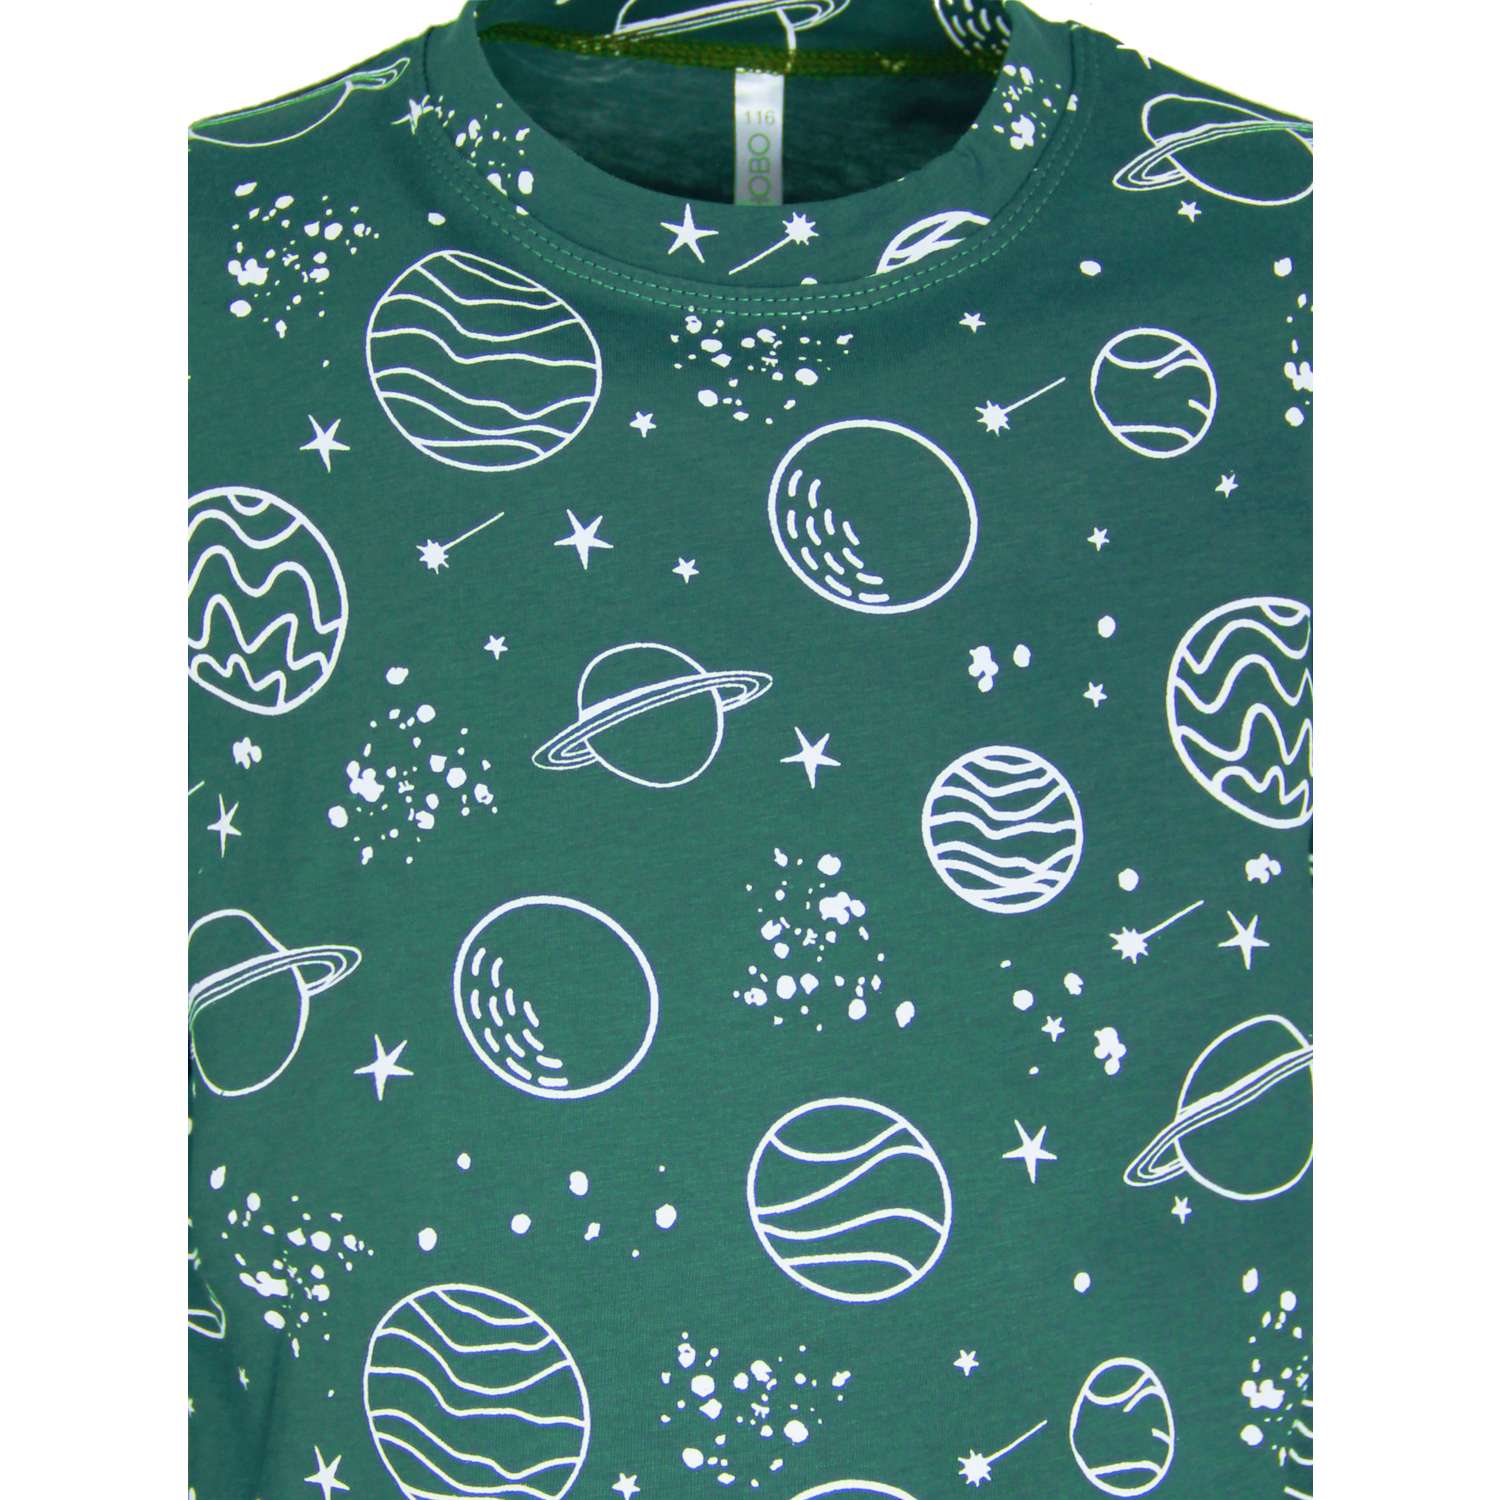 Пижама ИНОВО GS1174/темно-зеленый-планеты - фото 2